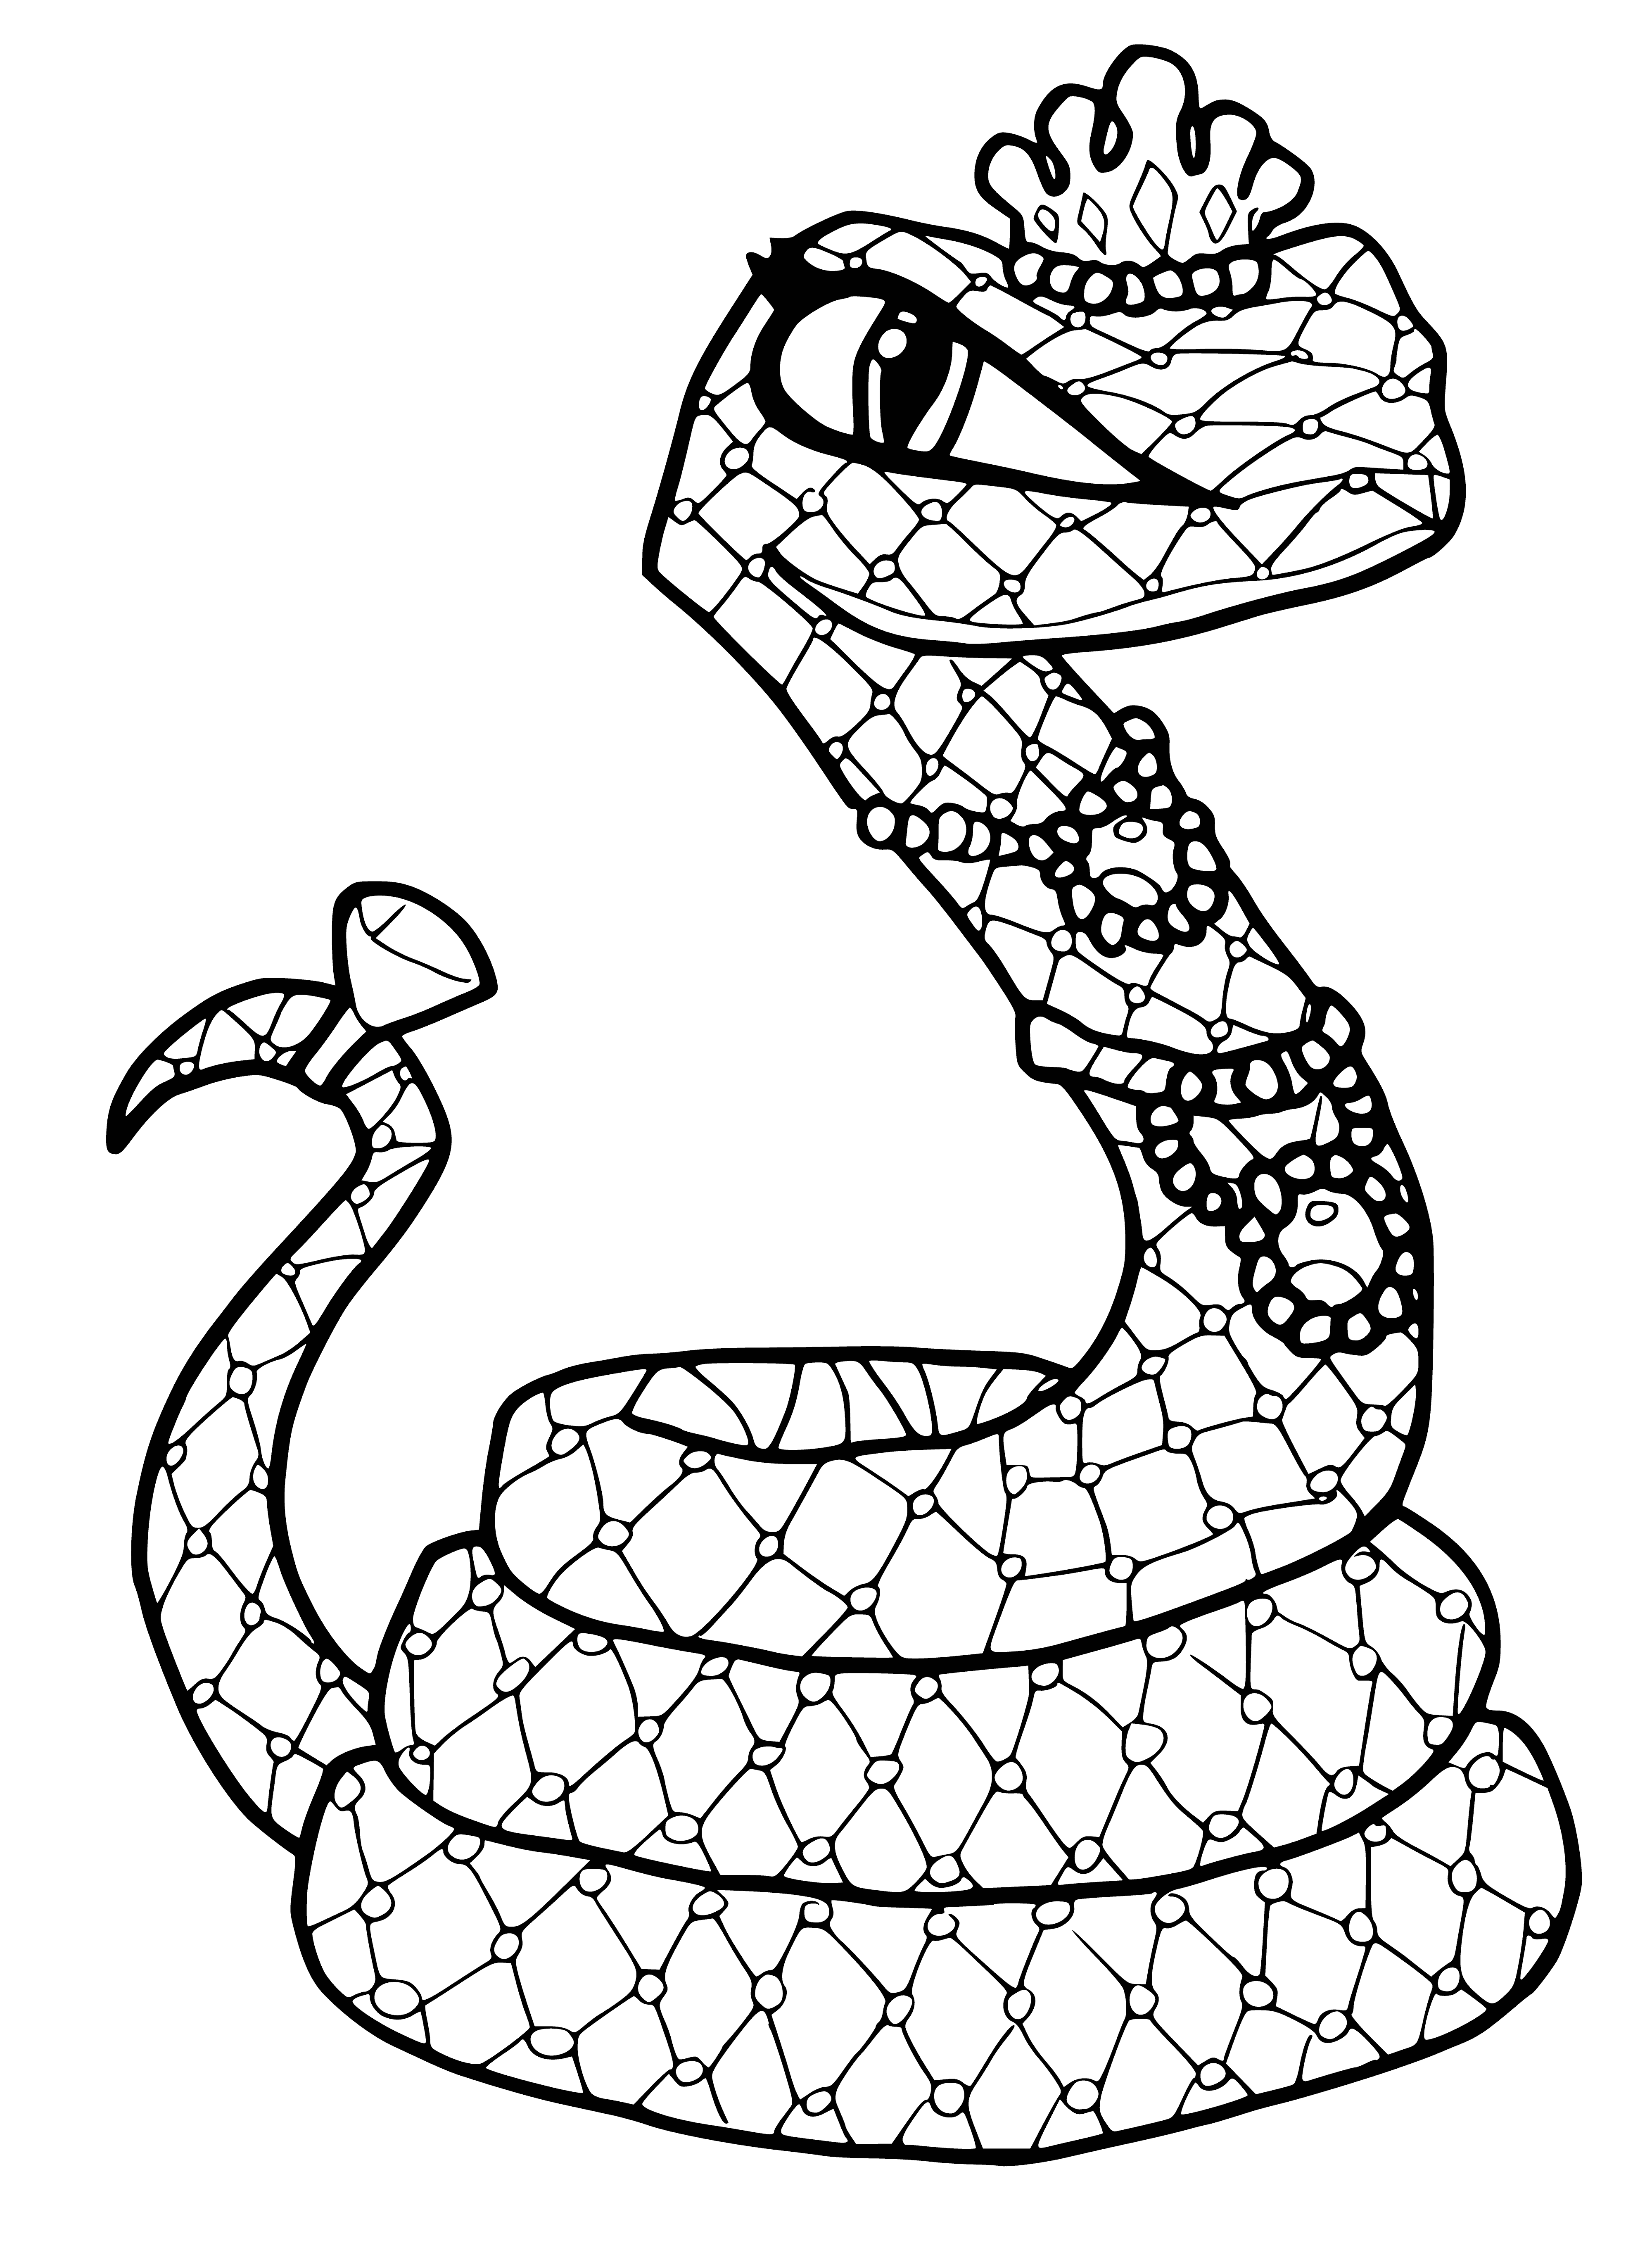 coloring page: Cleo de Nile - Pet cobra w/brown body, yellow/black head, orange eyes; coiled w/head raised.